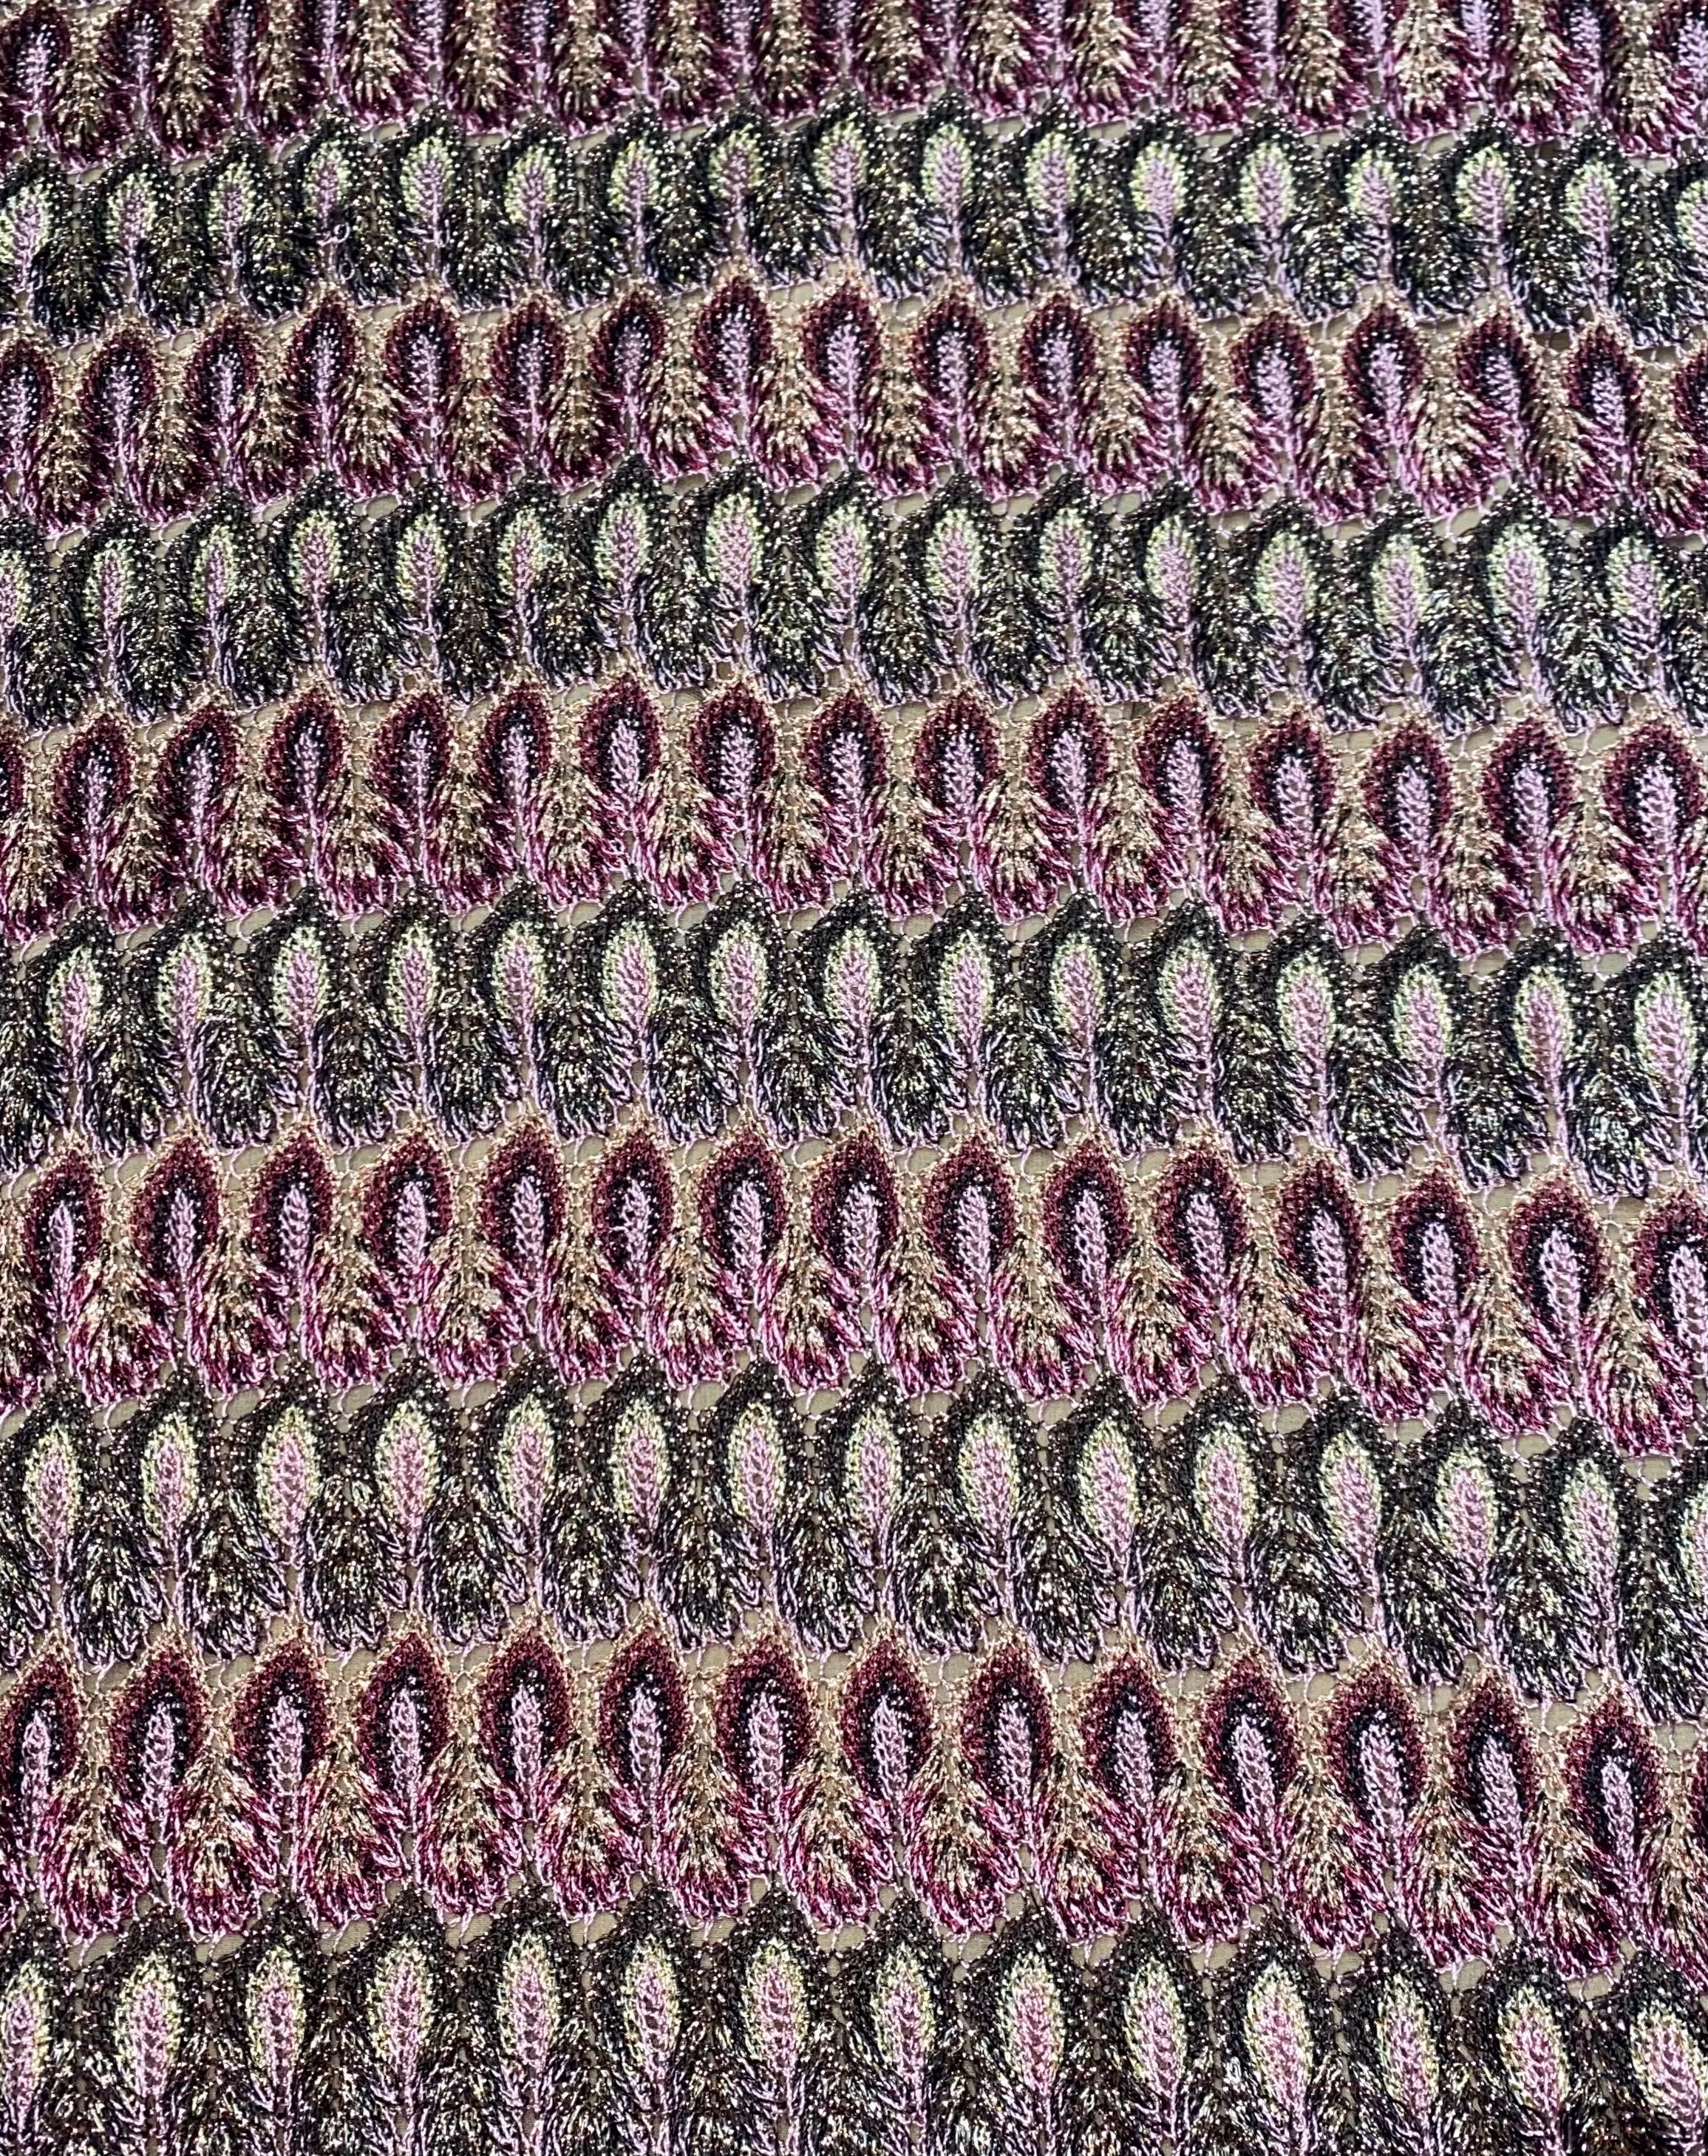 Brown UNWORN Missoni Chain Metallic Crochet Knit Maxi Dress Evening Gown 42